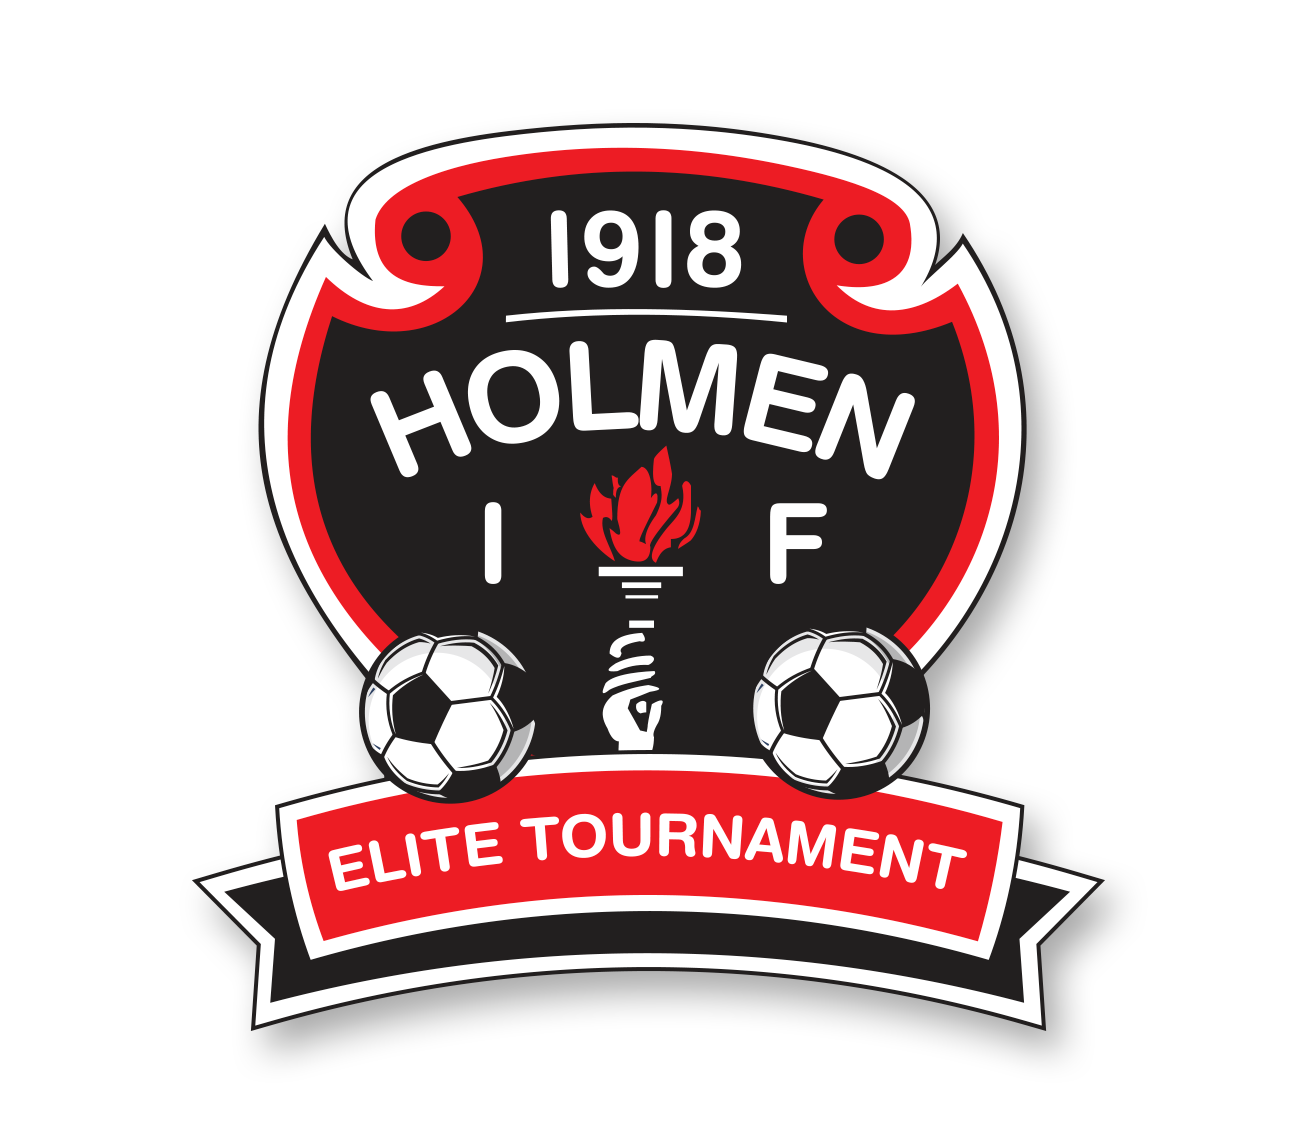 Holmen IF Fotball